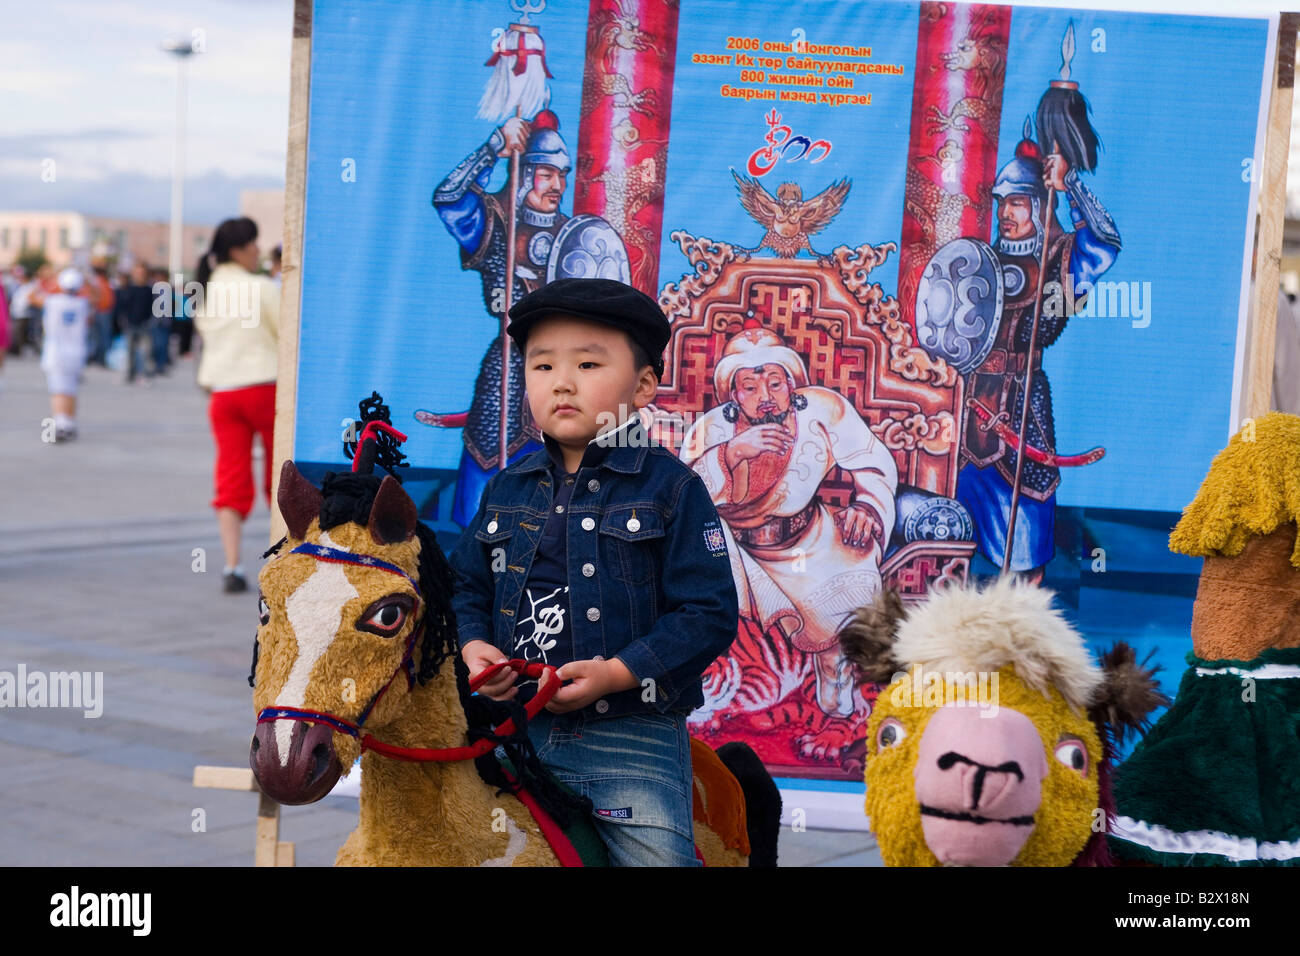 Sukhbaatar Platz Woche das Naadam-Fest feiert das 800. Jubiläum oder der mongolischen Staat Dschingis Khan Photobooth Stockfoto